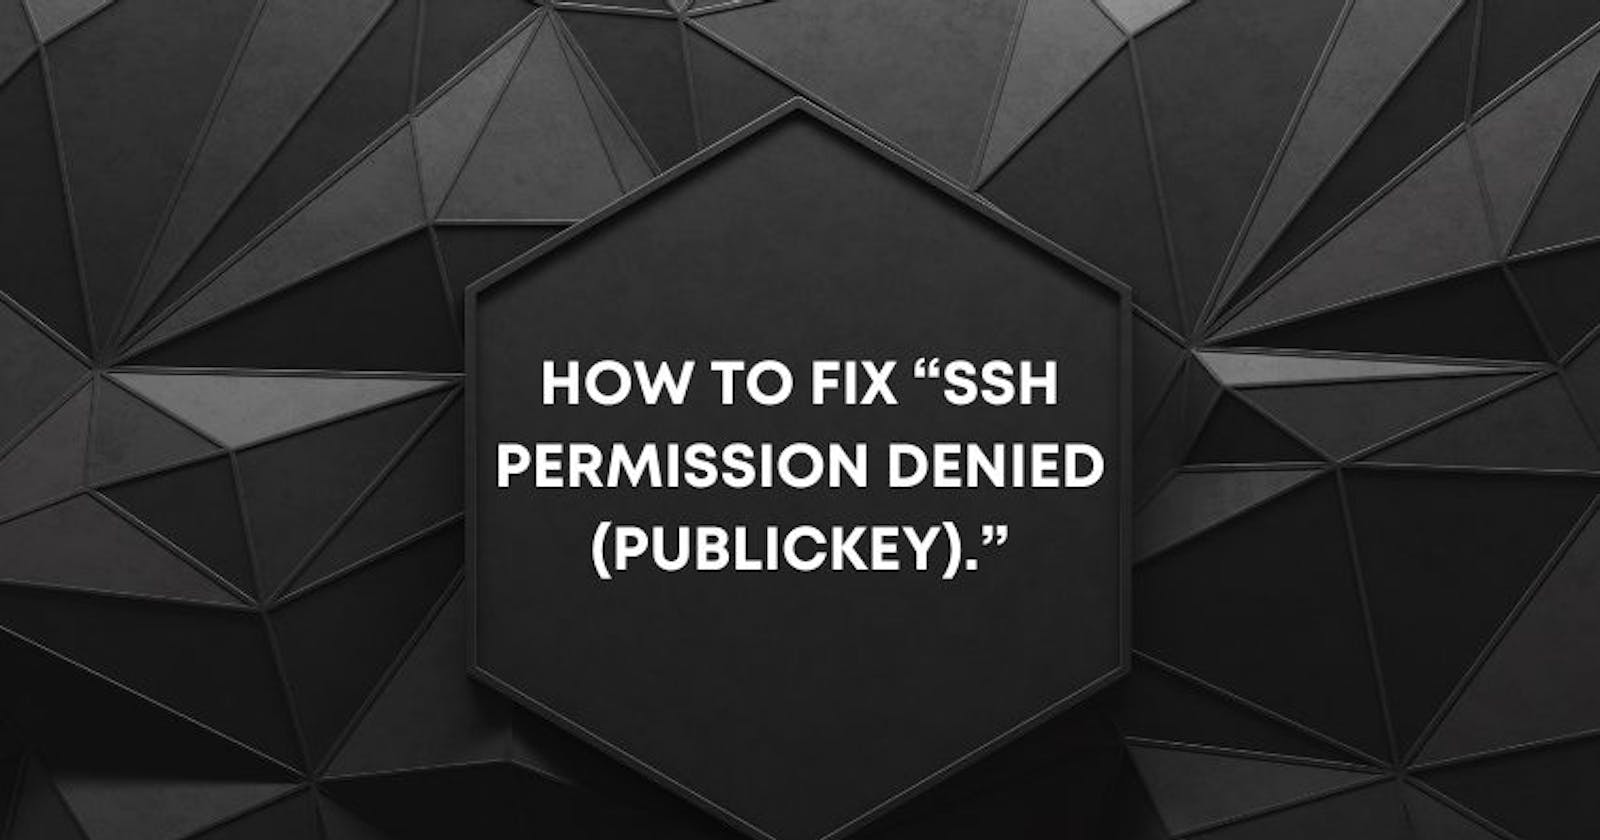 How to Fix “SSH Permission Denied (publickey).”